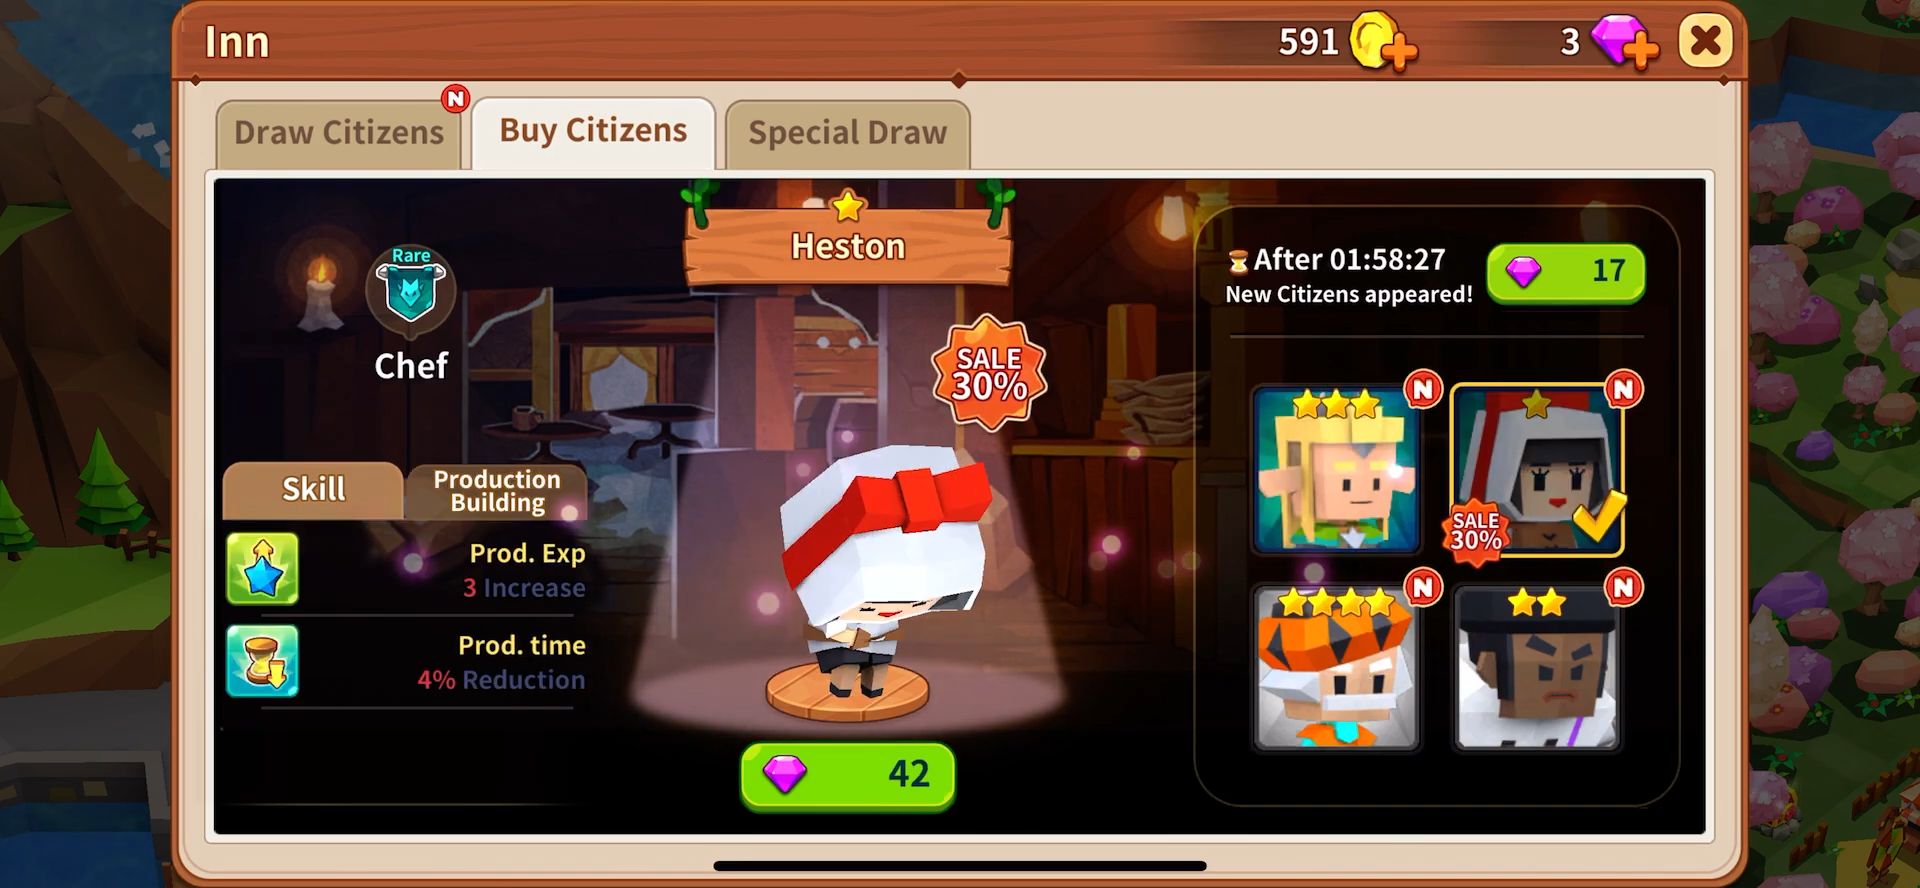 Garena Fantasy Town - Farm Sim - Android game screenshots.